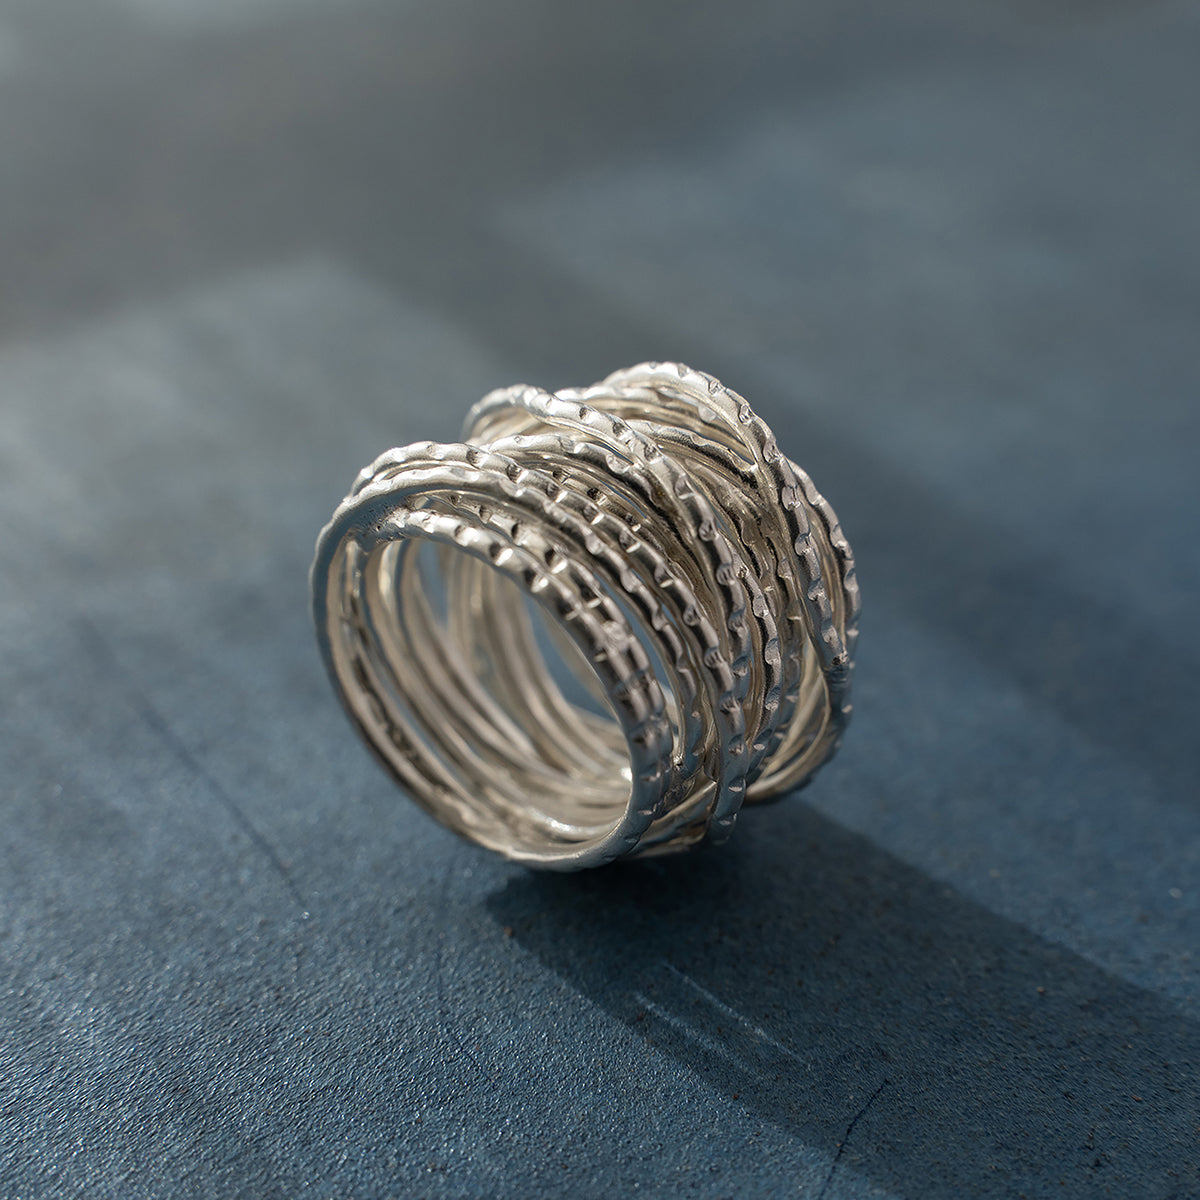 Spiral Wrap around Ring - Sterling Silver